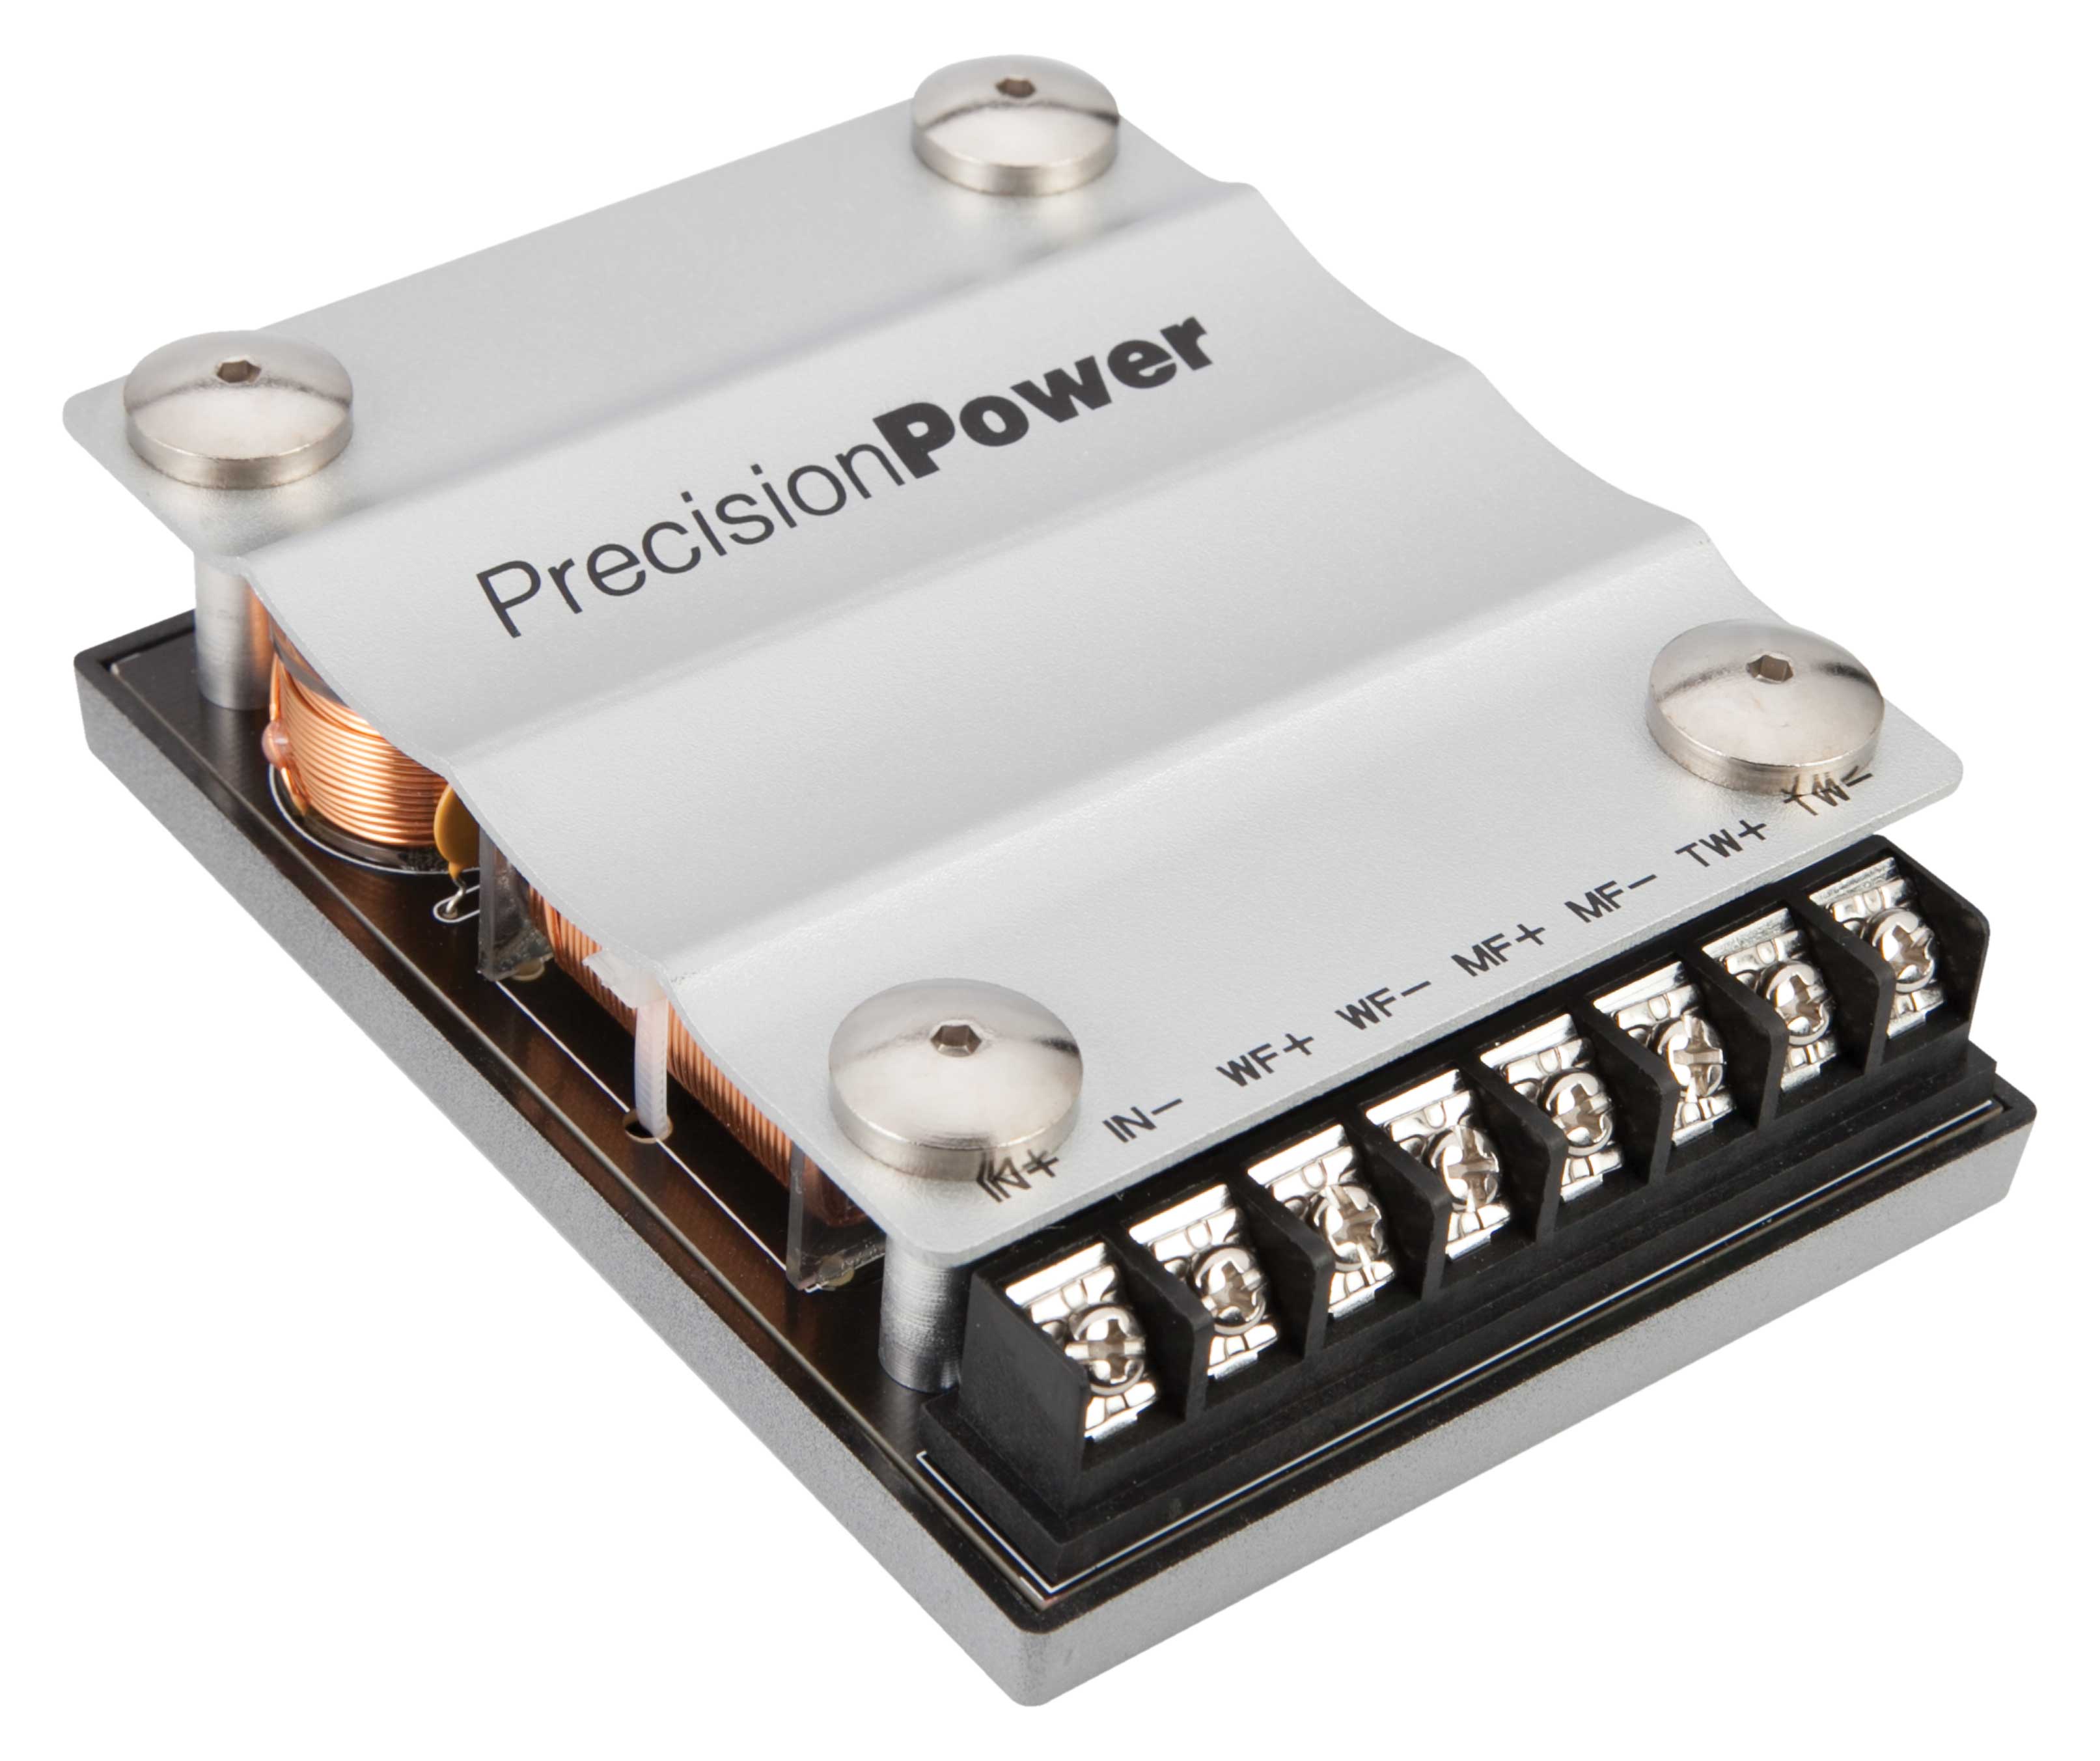 Precision Power P.65C3 Component Speaker Review